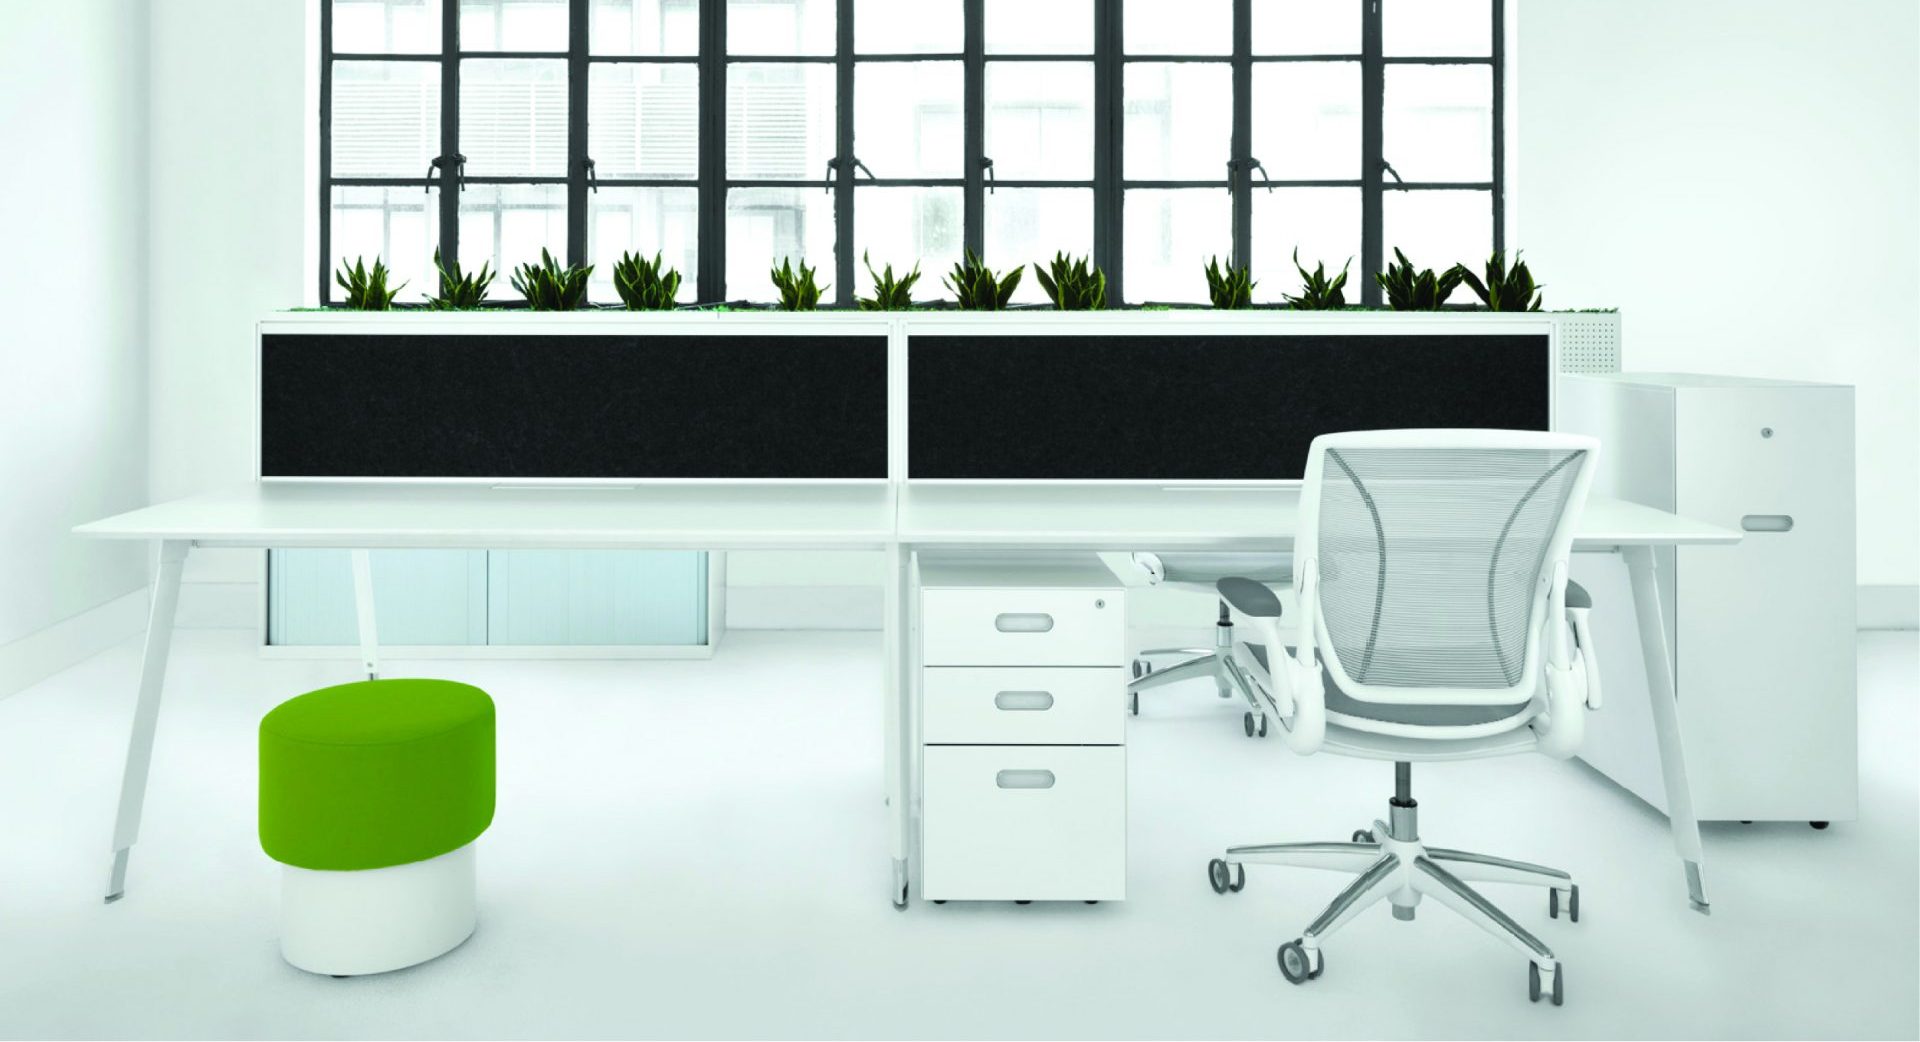 Memento Design (M) Sdn Bhd| Office Furnitures| Solutions| Interior